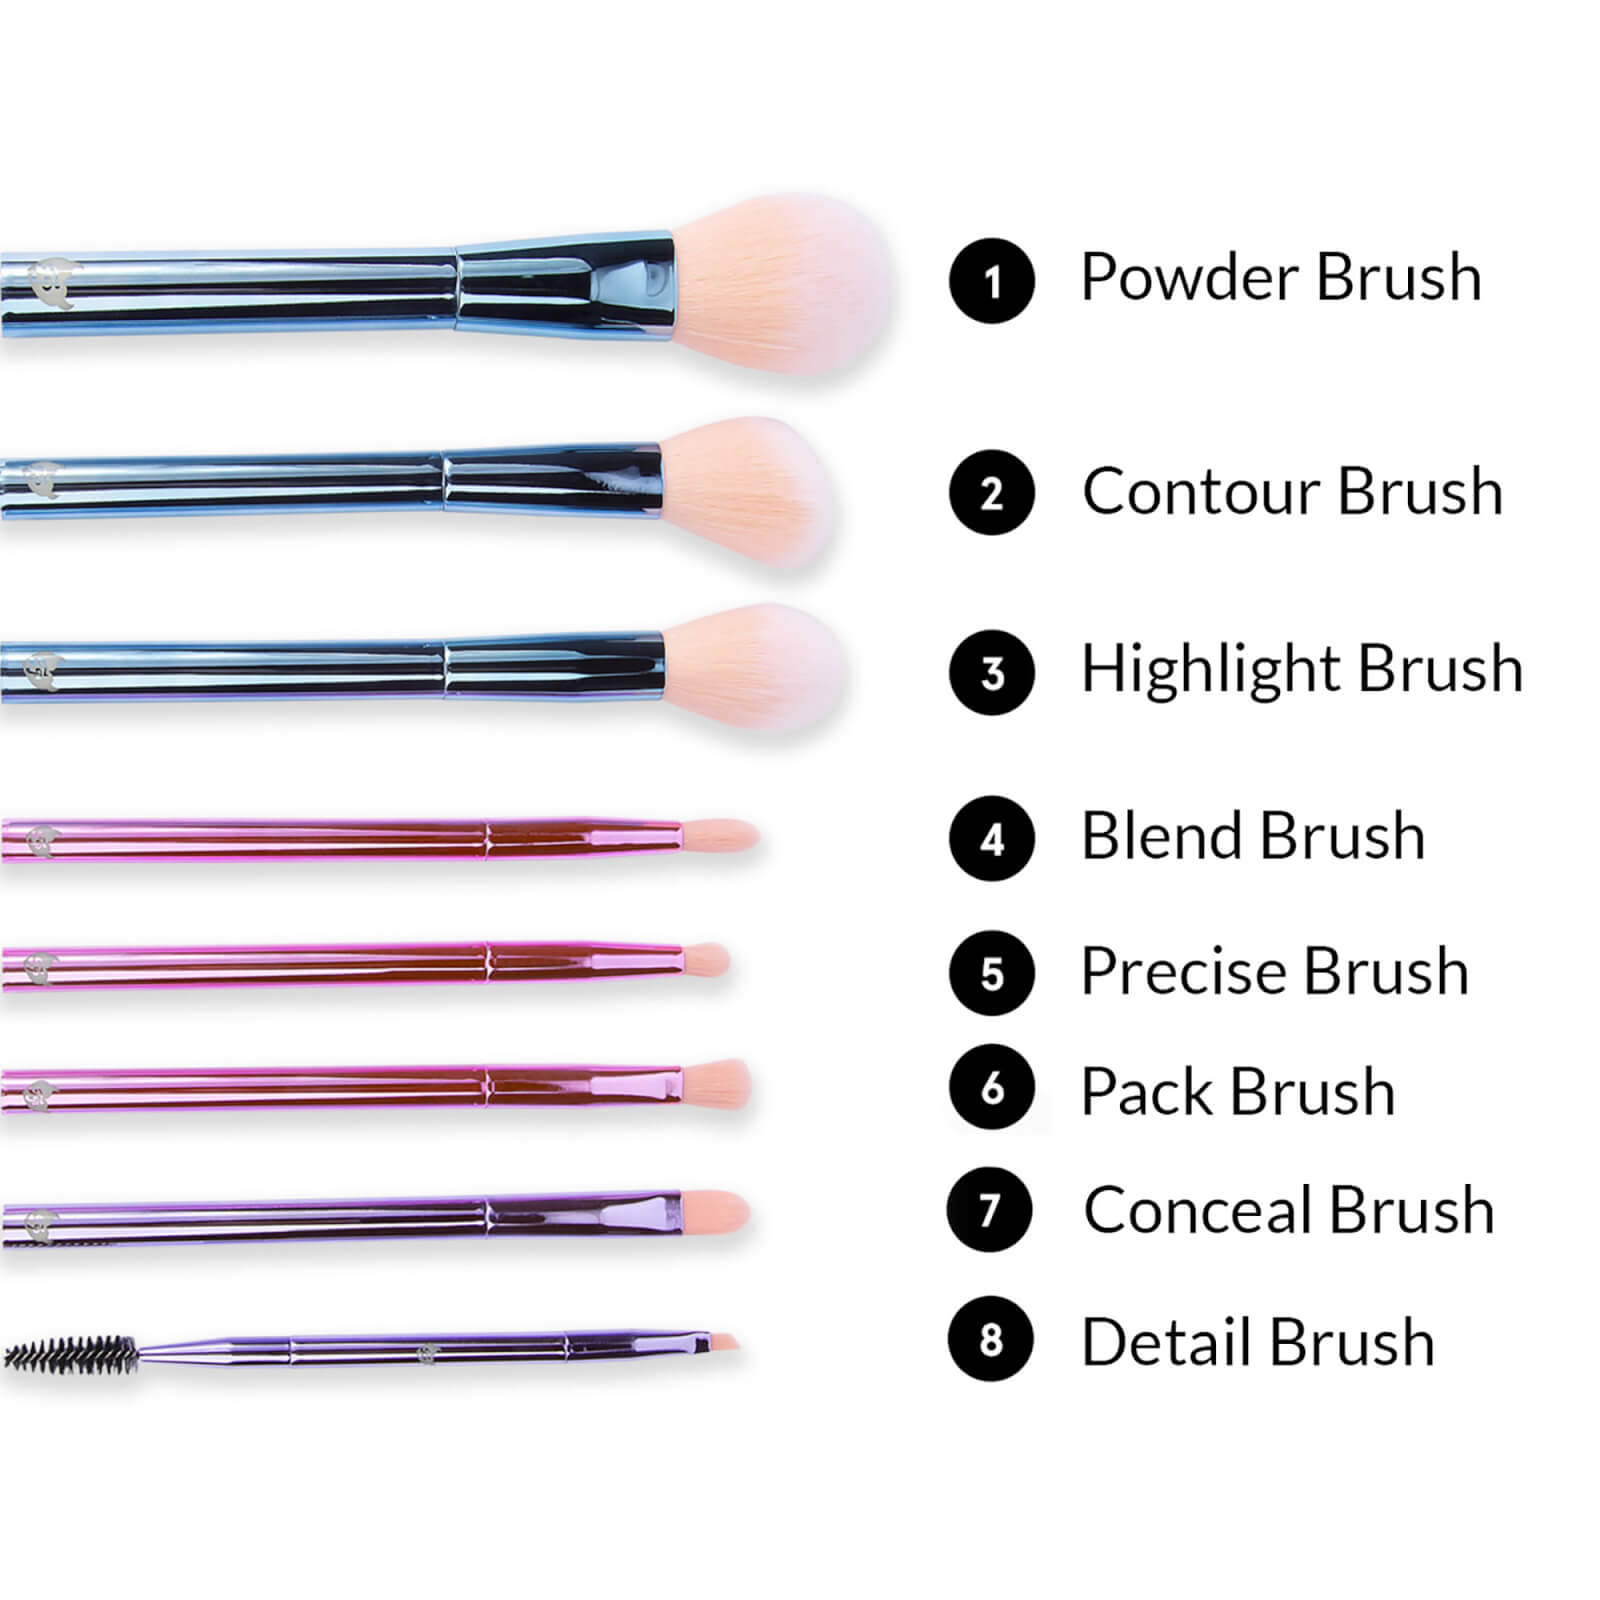 1, Powder Brush 2, Contour Brush 3, Highlight Brush 4, Blend Brush 5, Precise Brush 6, Pack Brush 7, Conceal Brush 8, Detail Brush